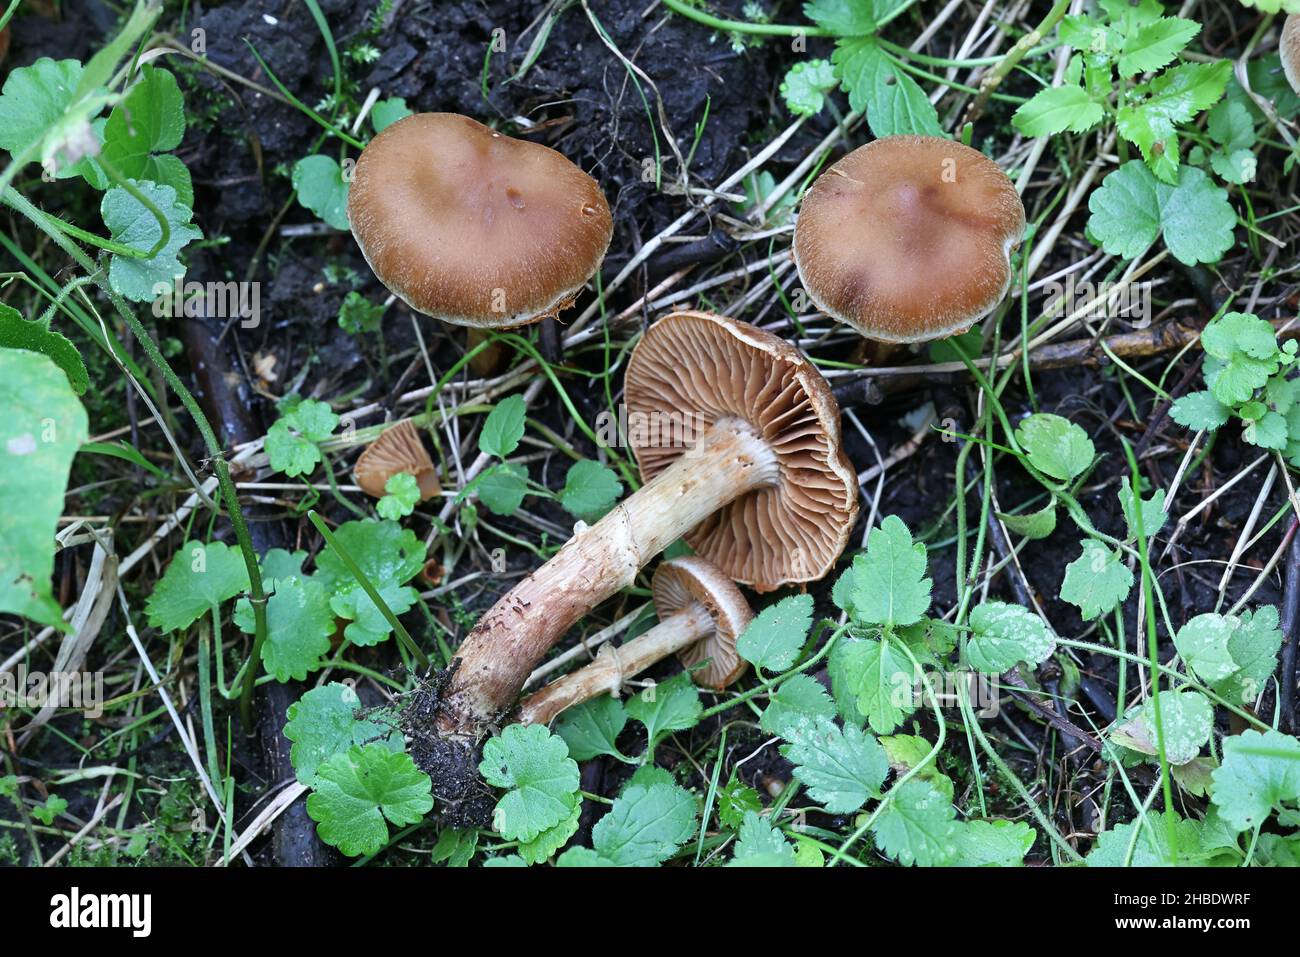 Cortinarius hinnuleus, known as Earthy Webcap, wild mushroom from Finland Stock Photo